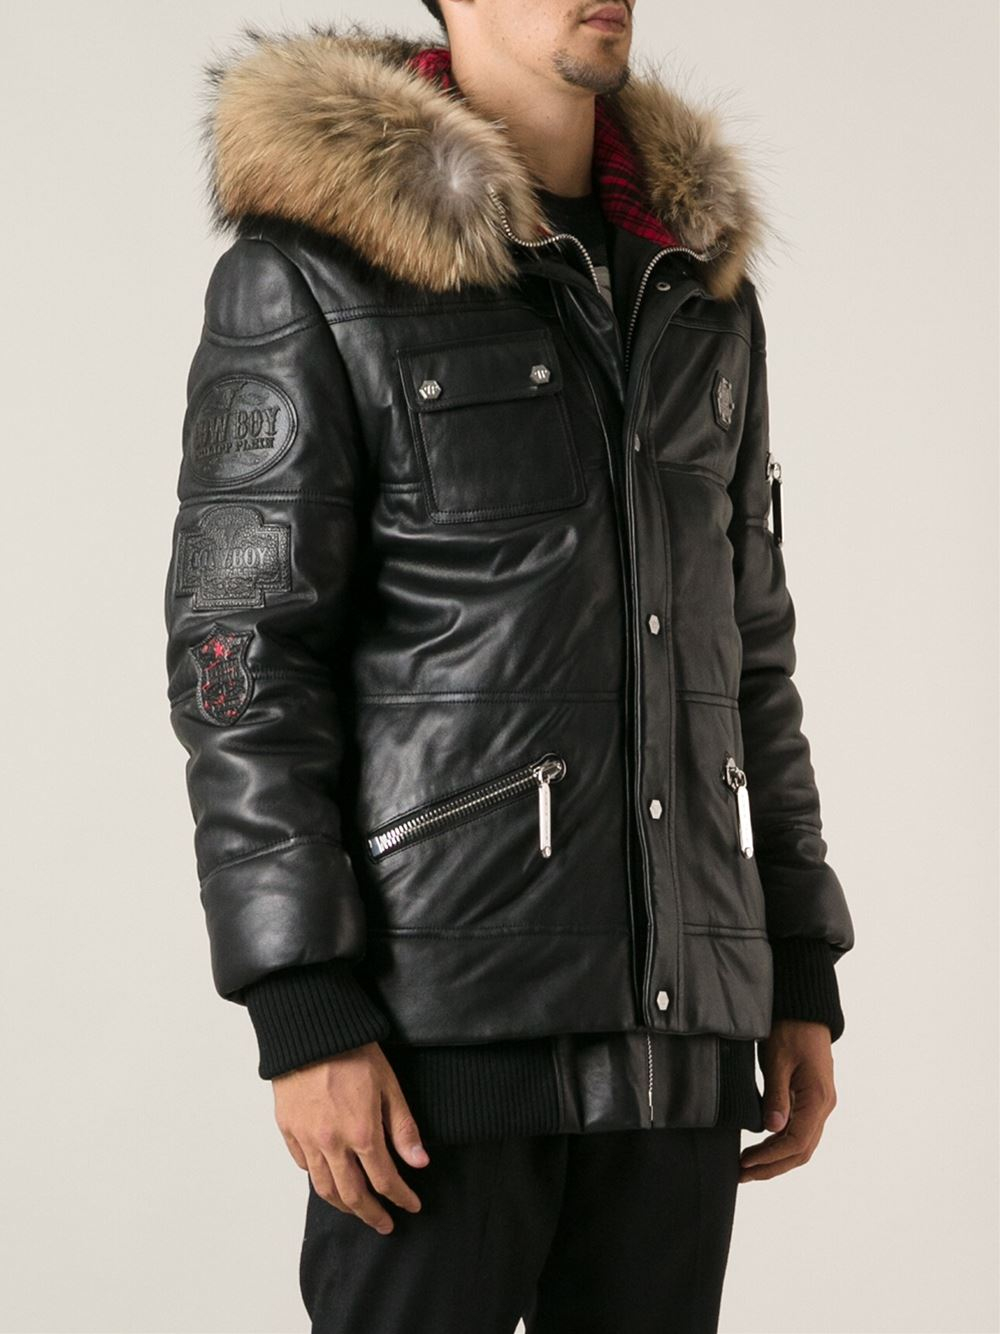 Philipp Plein Fur Hood Jacket in Black for Men - Lyst